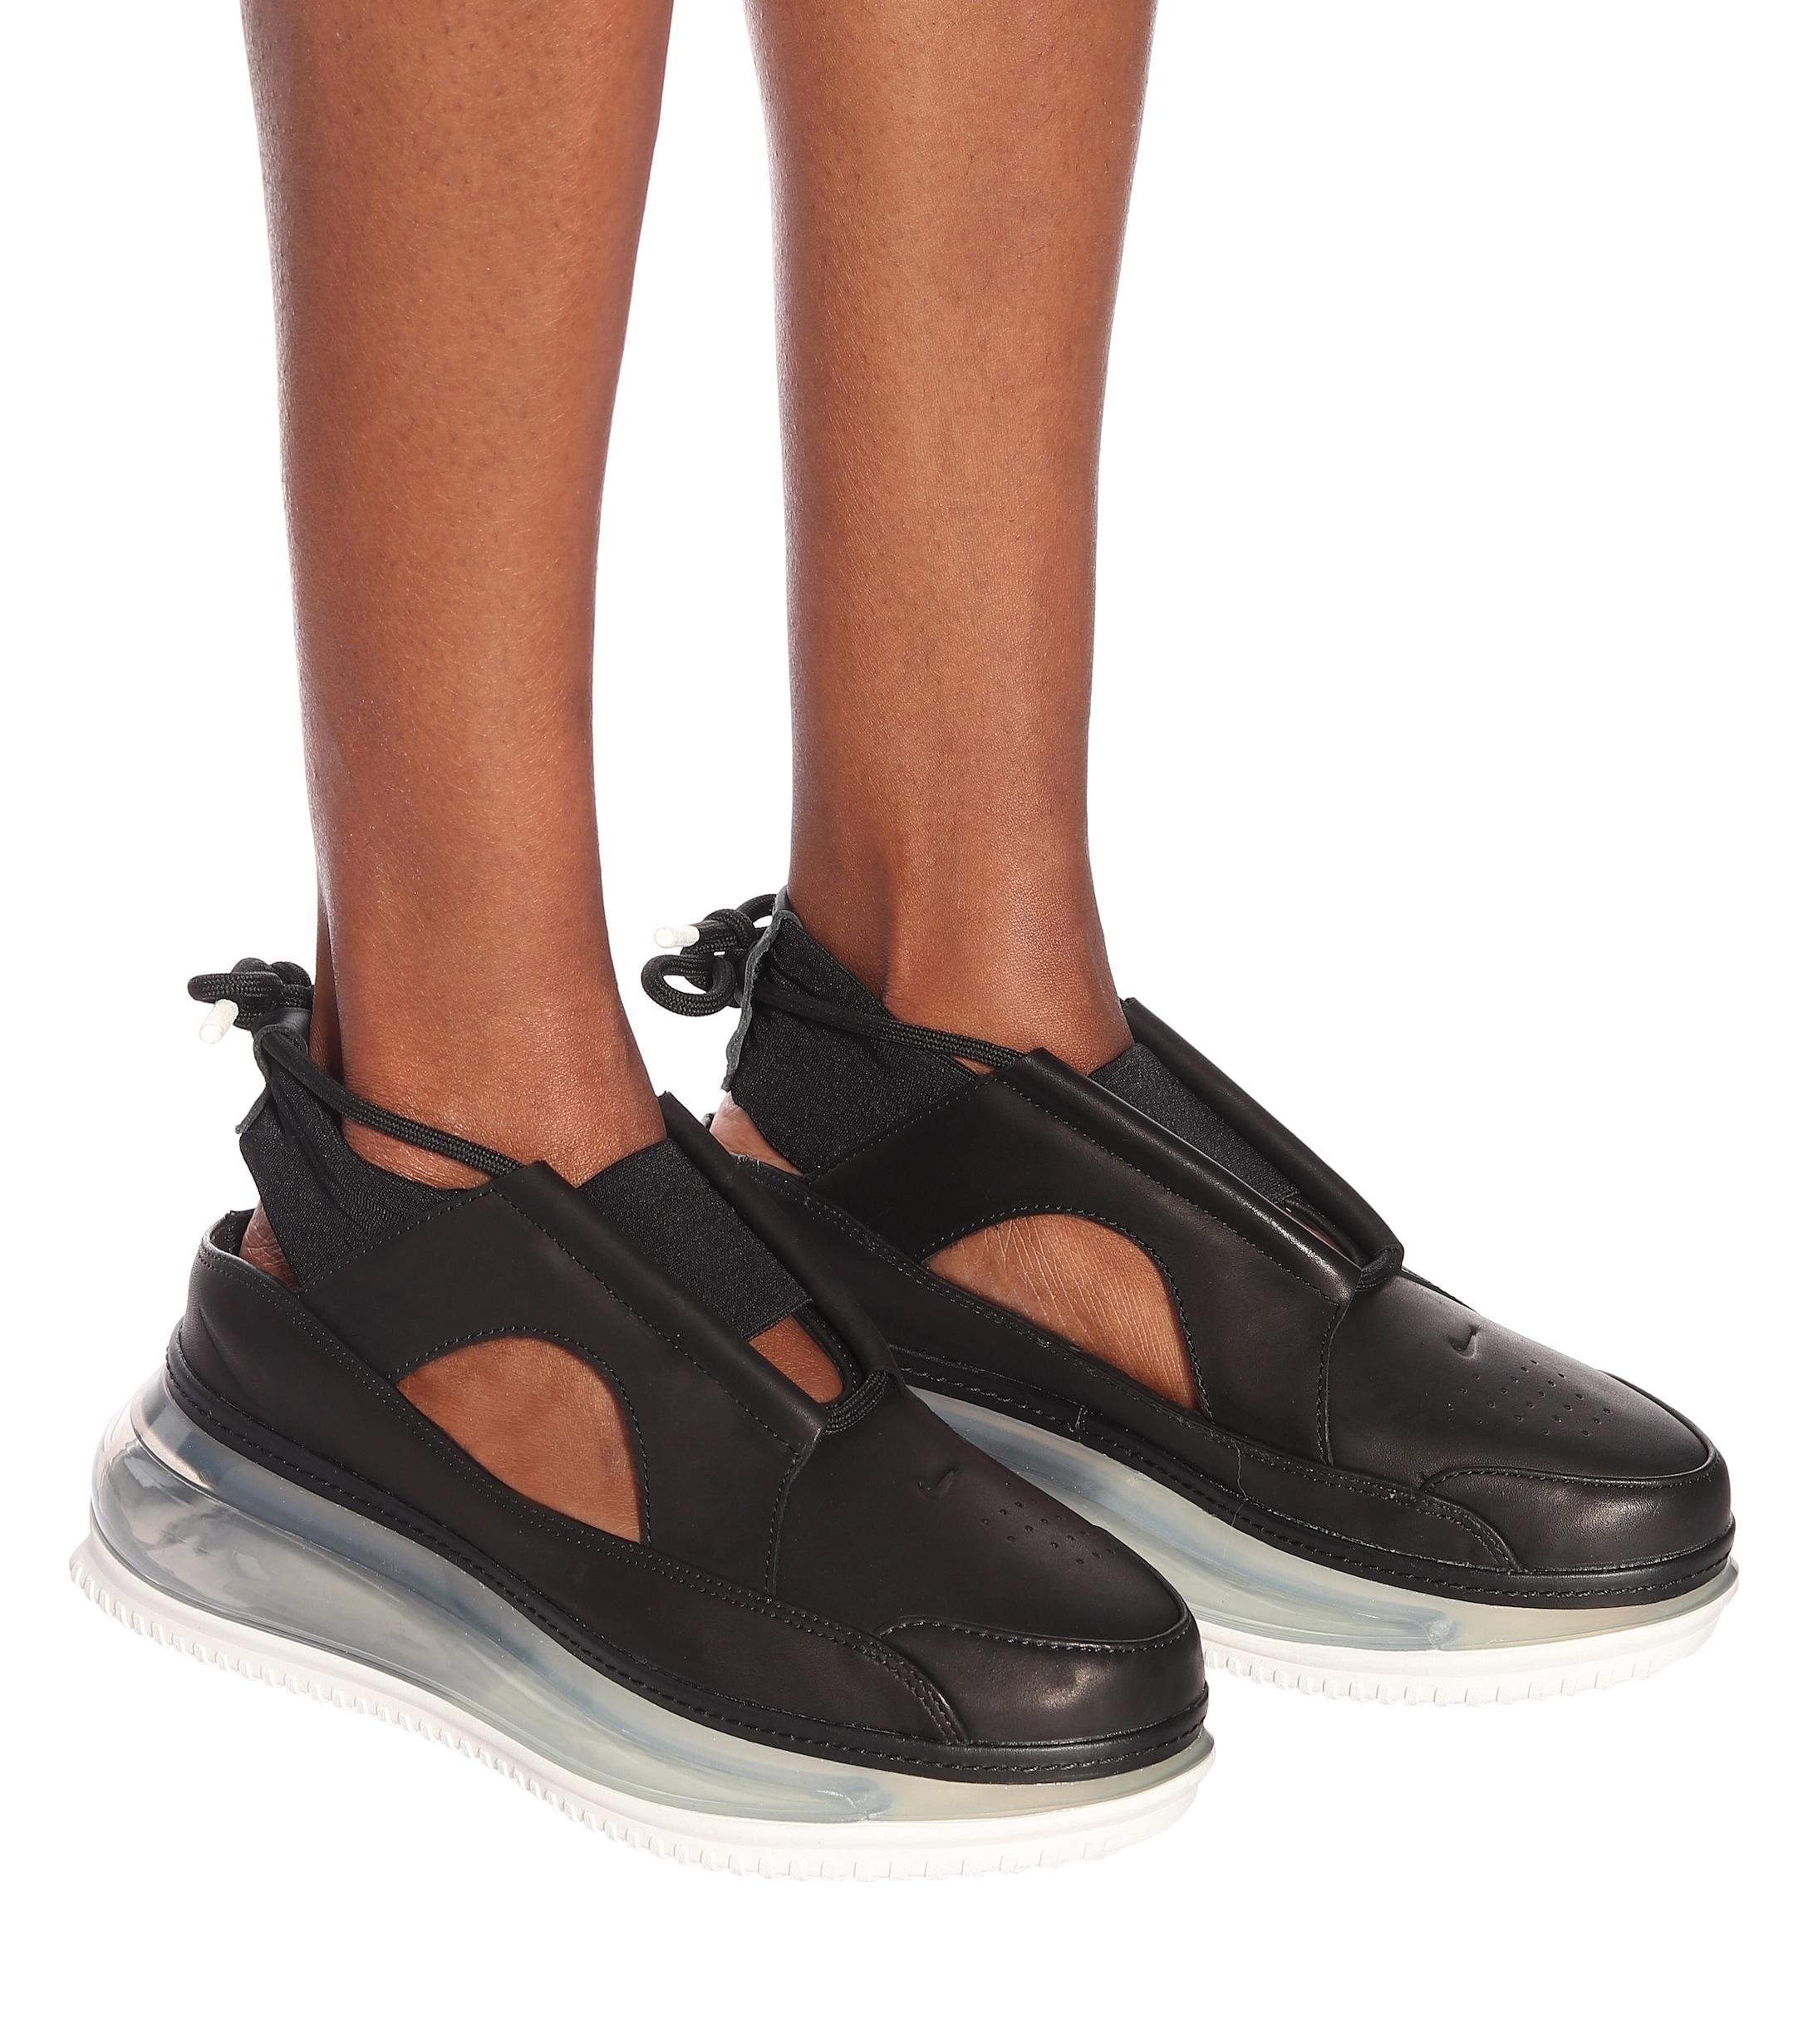 Nike Air Max 720 Leather Sneaker in Black - Lyst